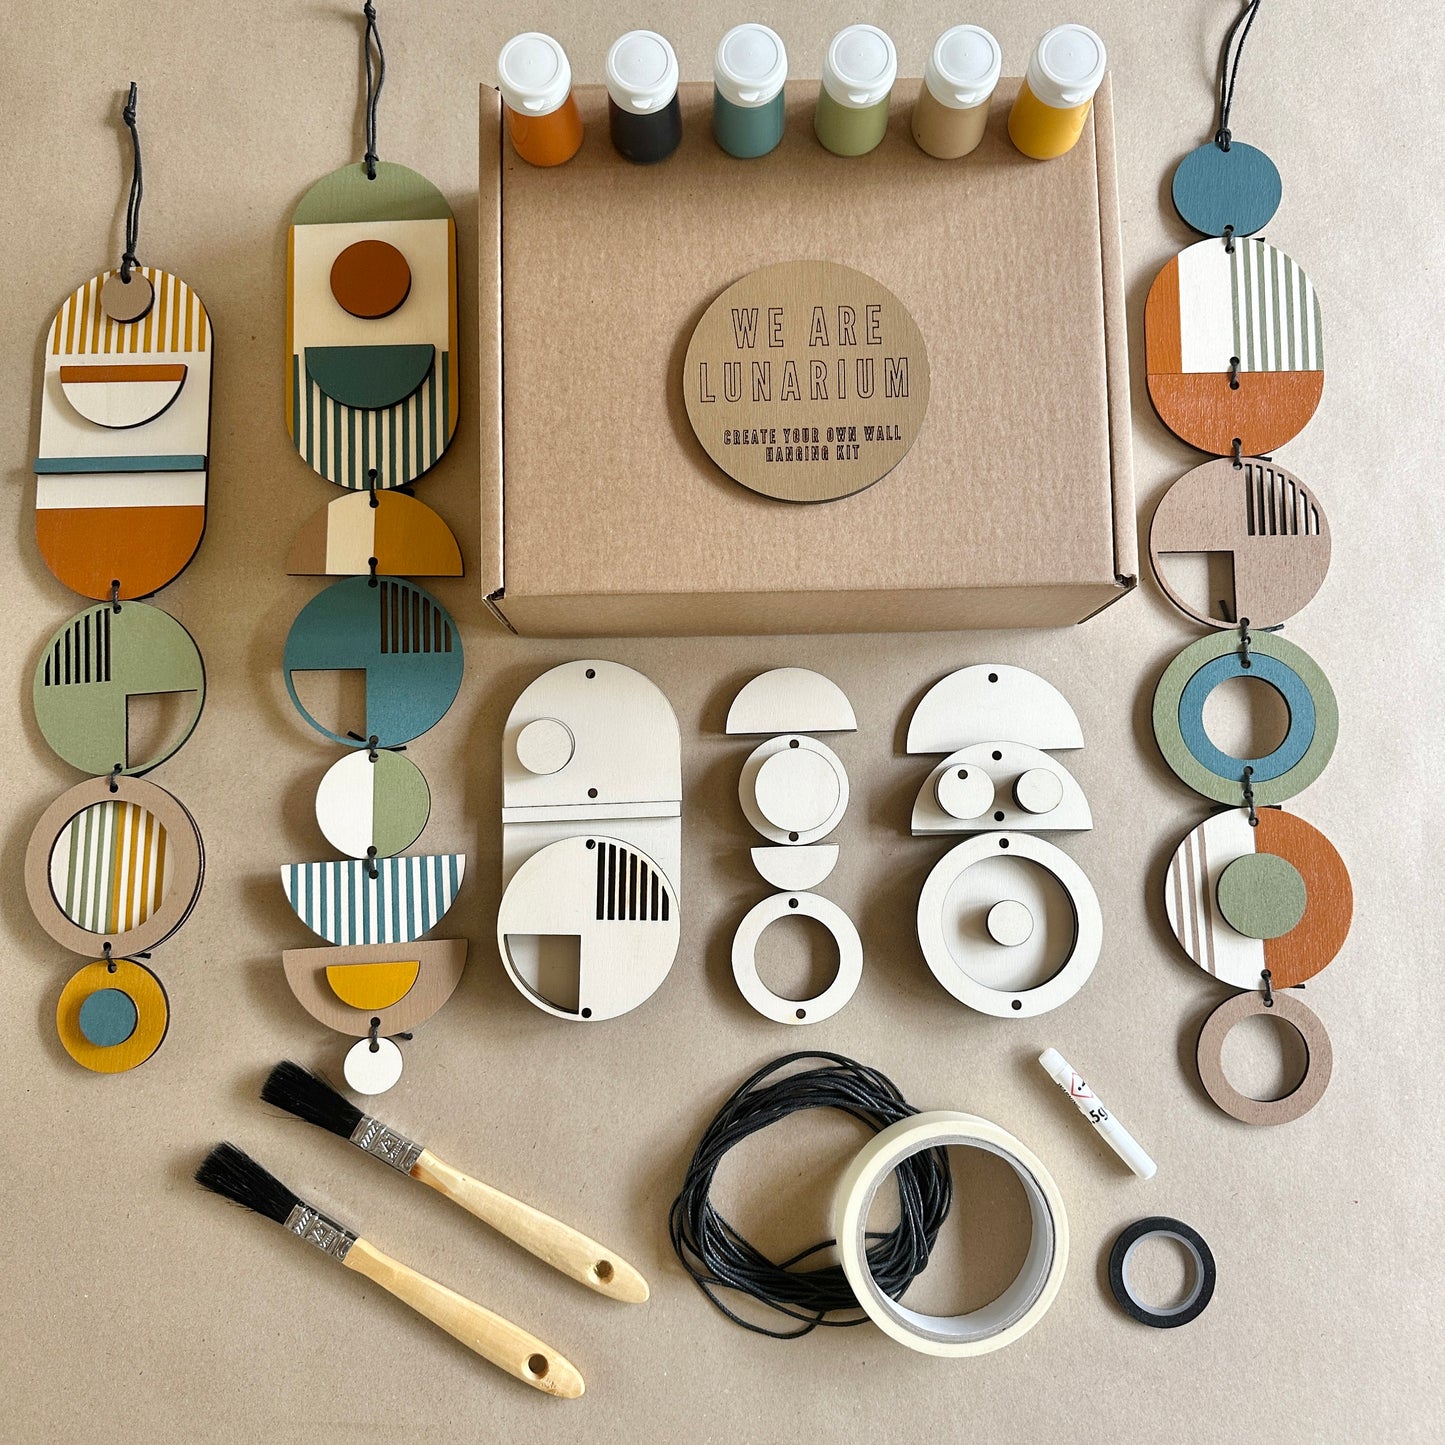 Original Artisan Craft DIY Make Your Own Wall Hanging Kit: Unleash Your Creativity